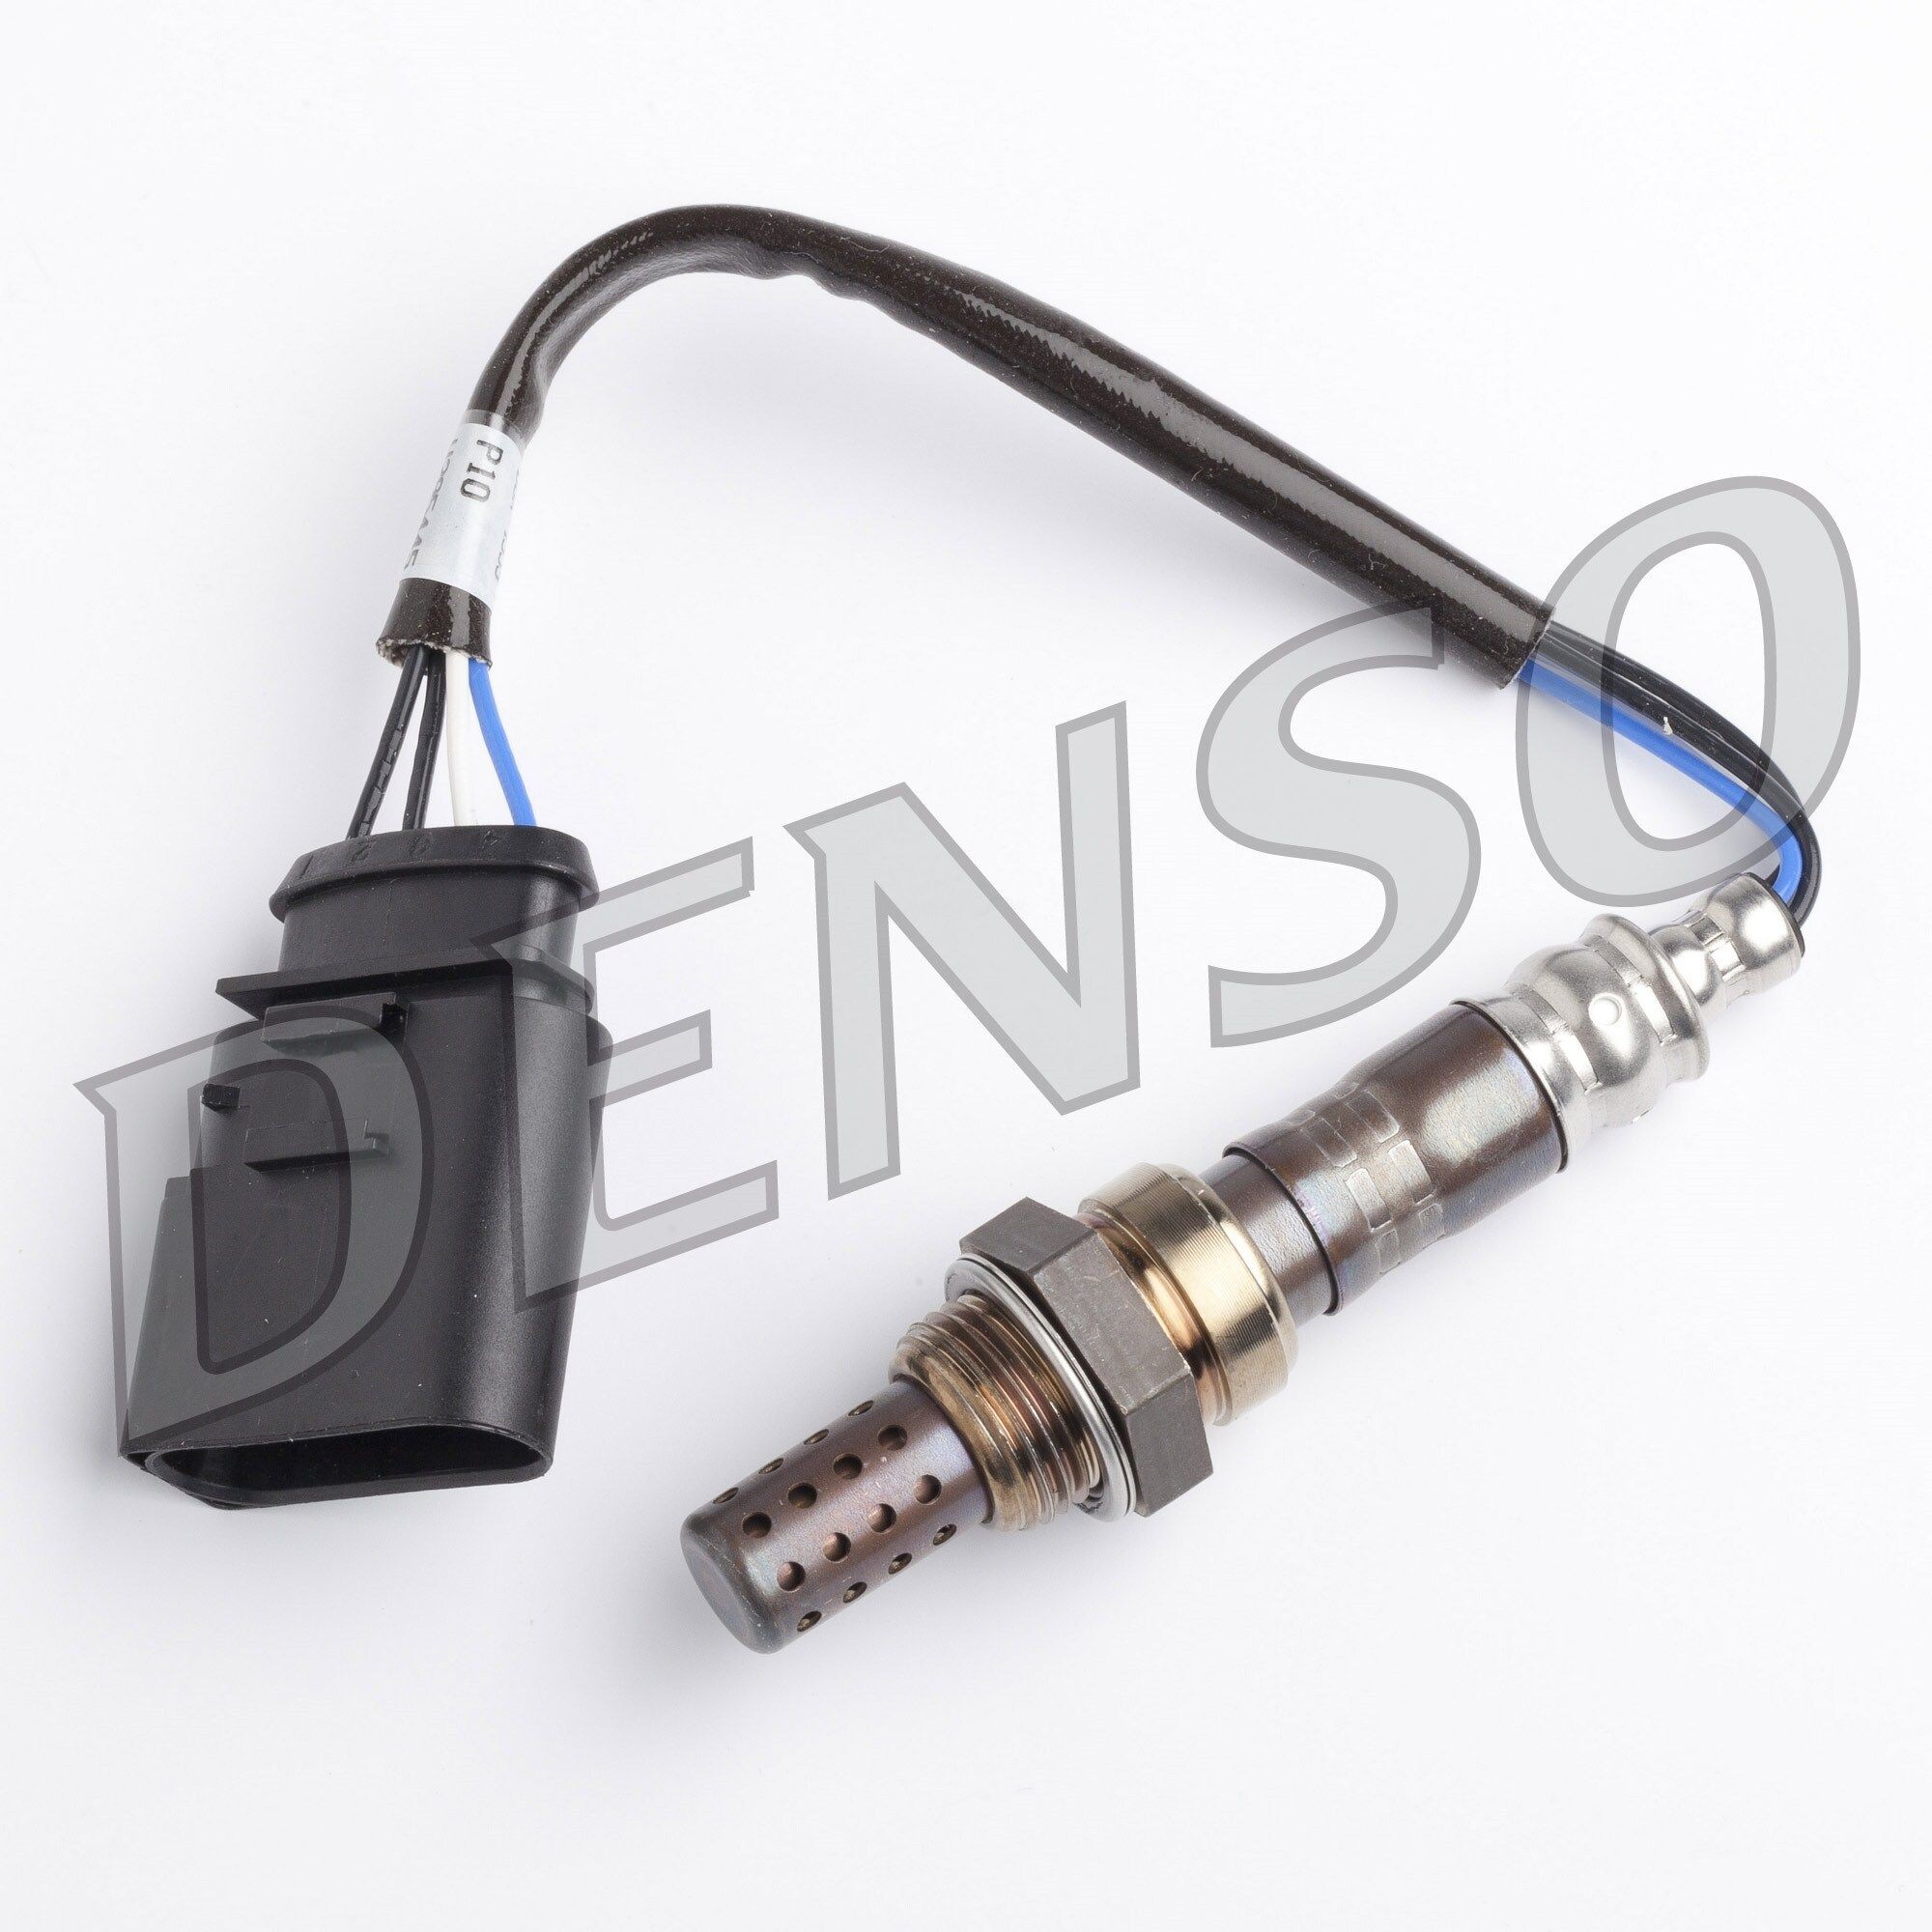 DENSO Direct Fit M18x1.5, Heated, Finger probe, Lambda Sensor Cable Length: 255mm Oxygen sensor DOX-1559 buy